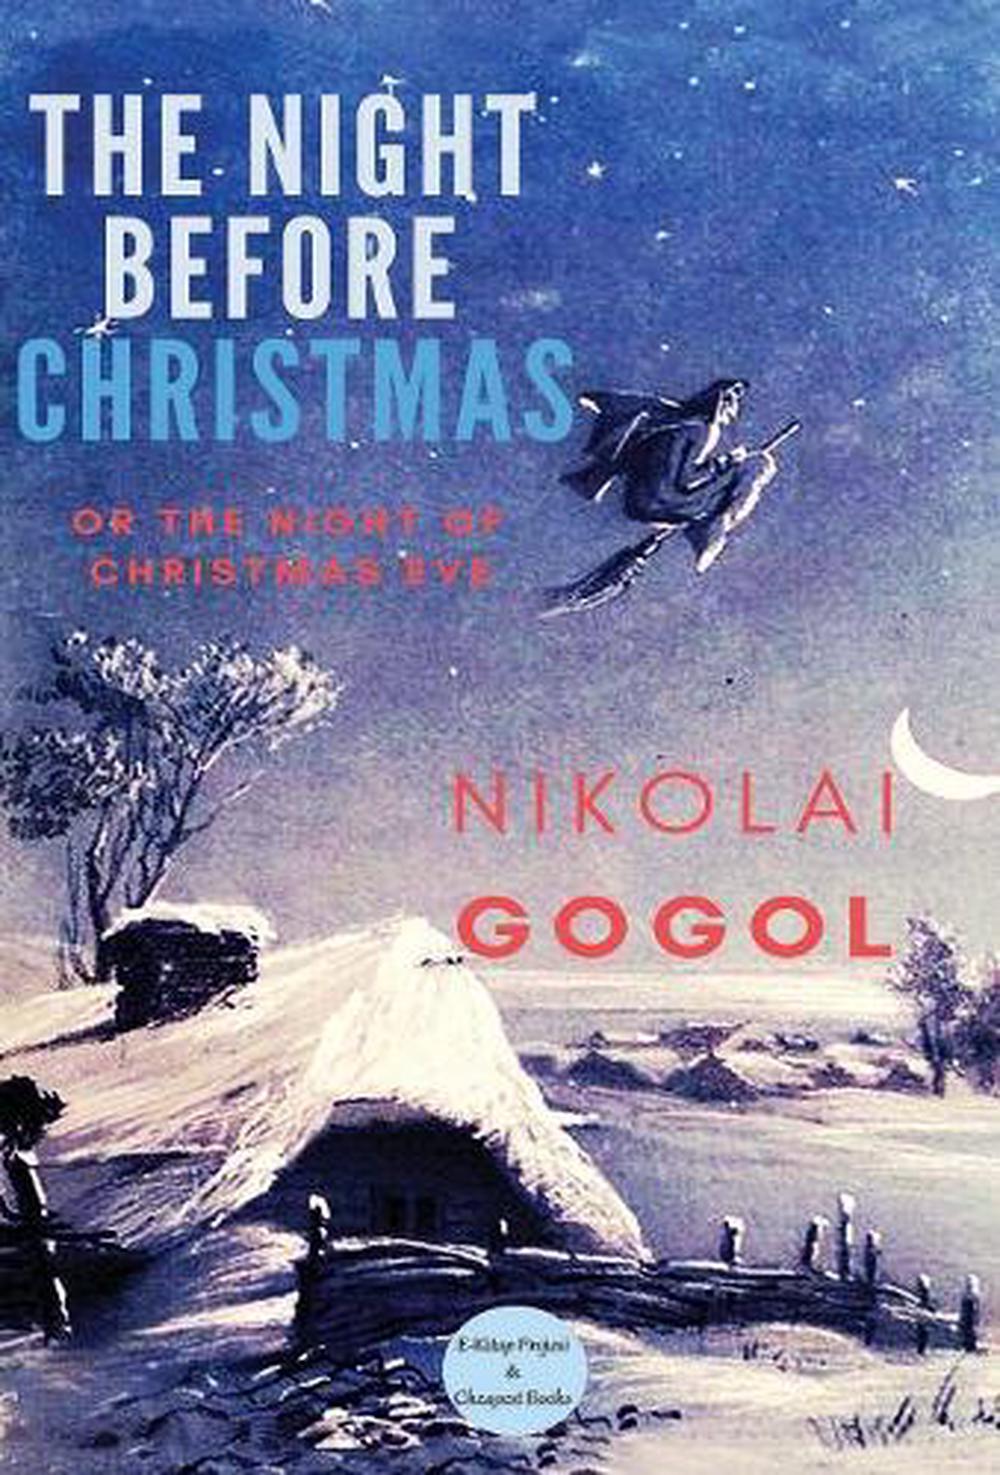 The Night Before Christmas by Nikolai Gogol